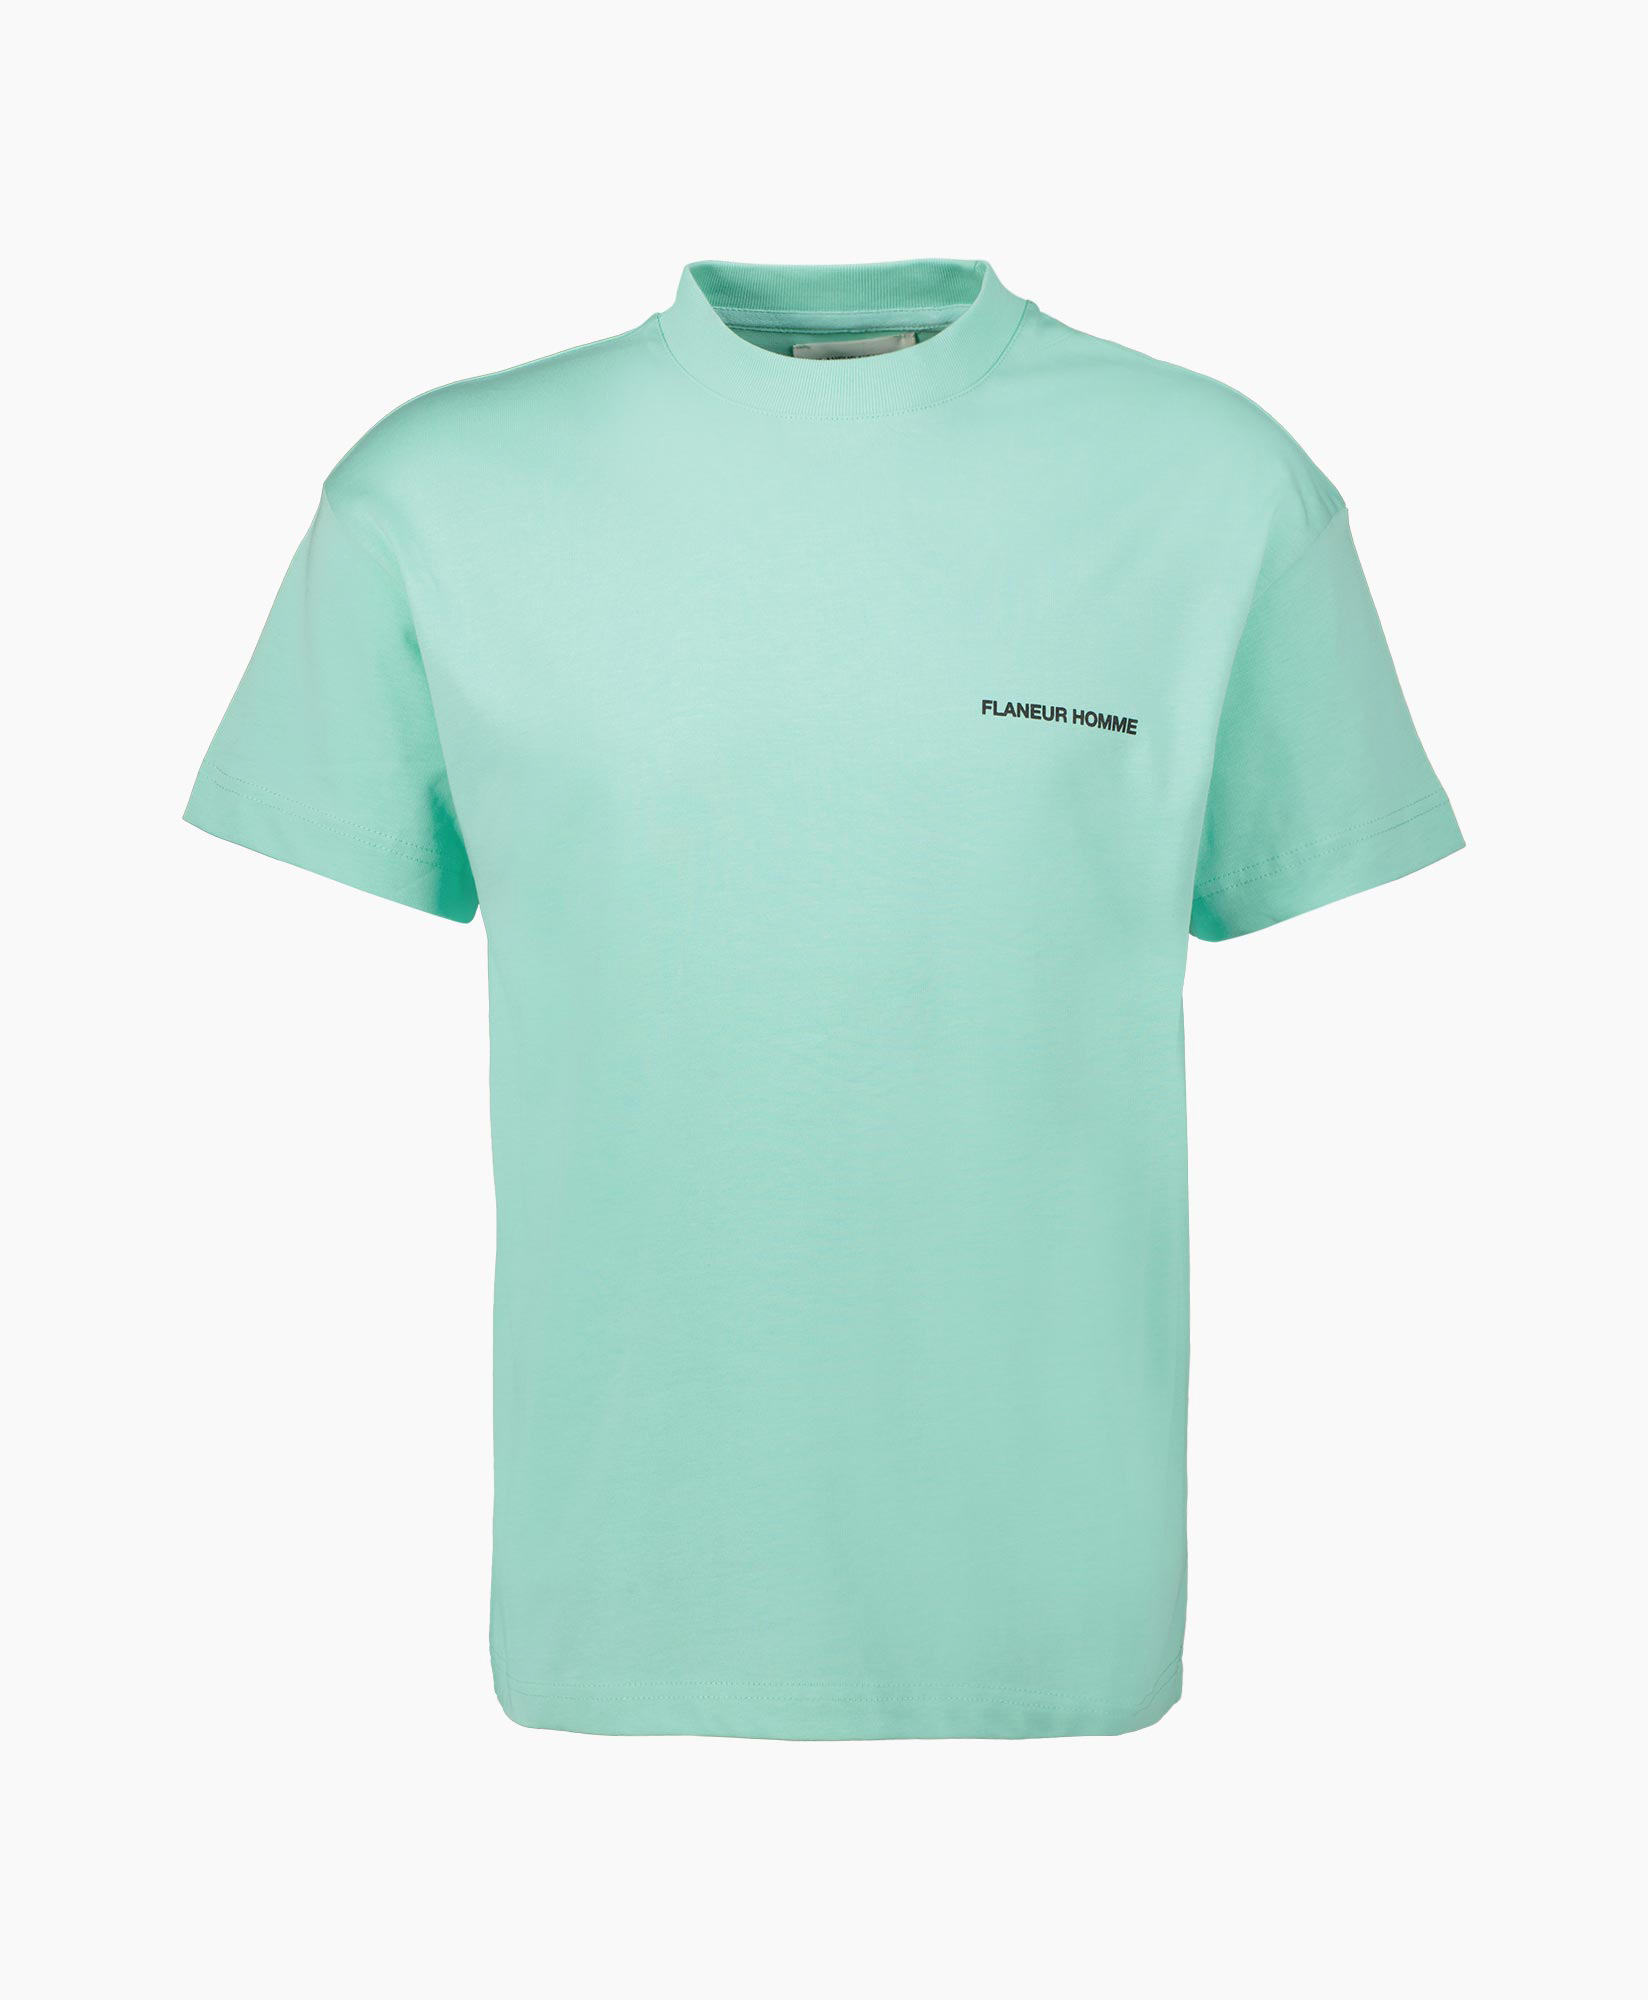 Flaneur Homme T-shirt Korte Mouw Peace T-shirt turquoise